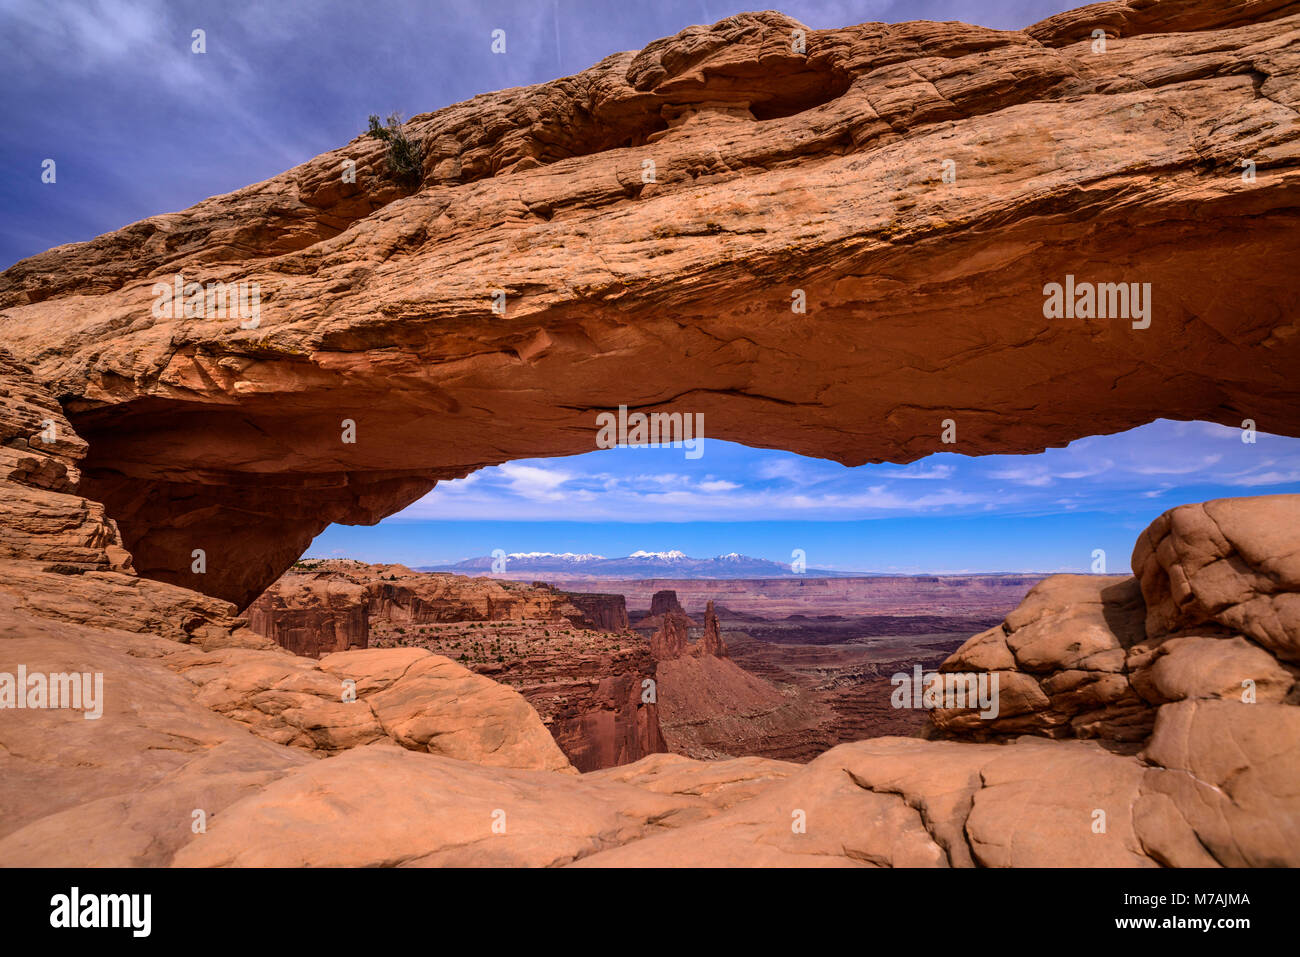 The USA, Utah, San Juan county, Moab, Canyonlands National Park, Island in the Sky, Mesa Arch towards La Sal Mountains Stock Photo